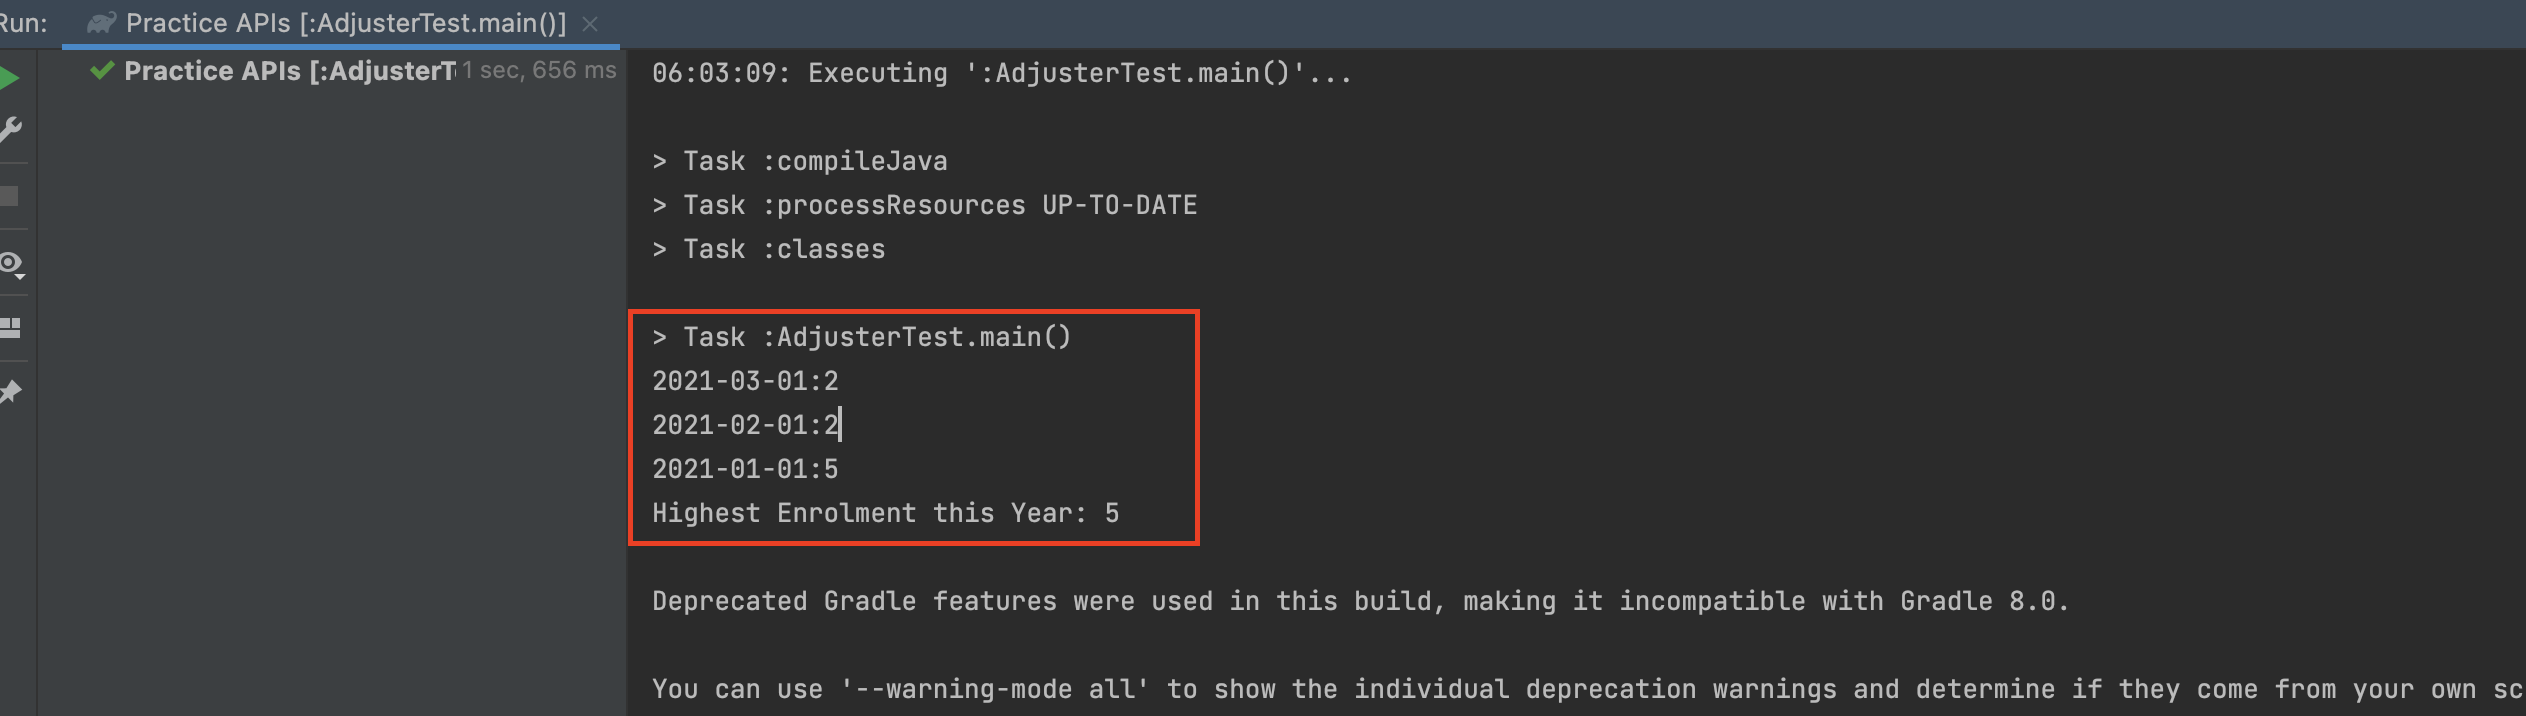 TemporalAdjuster In Java